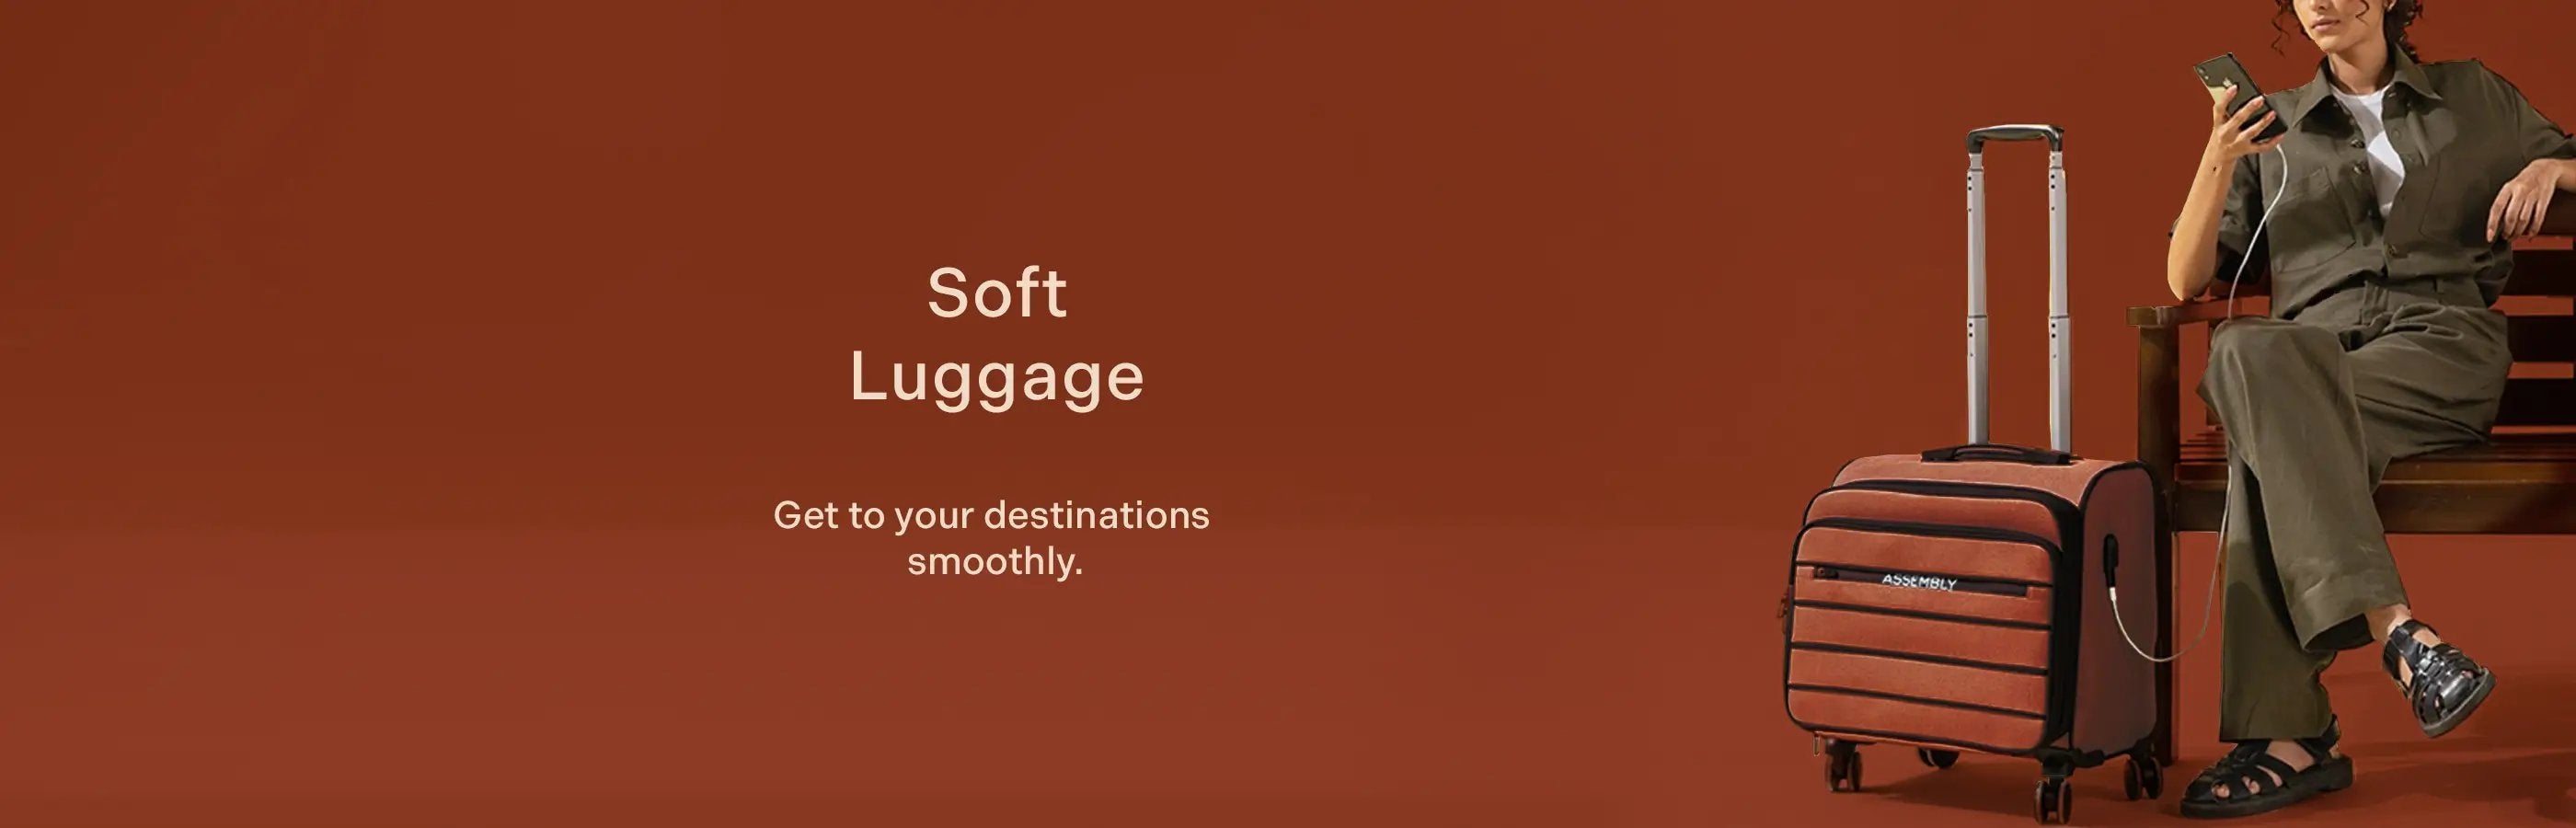 soft luggage